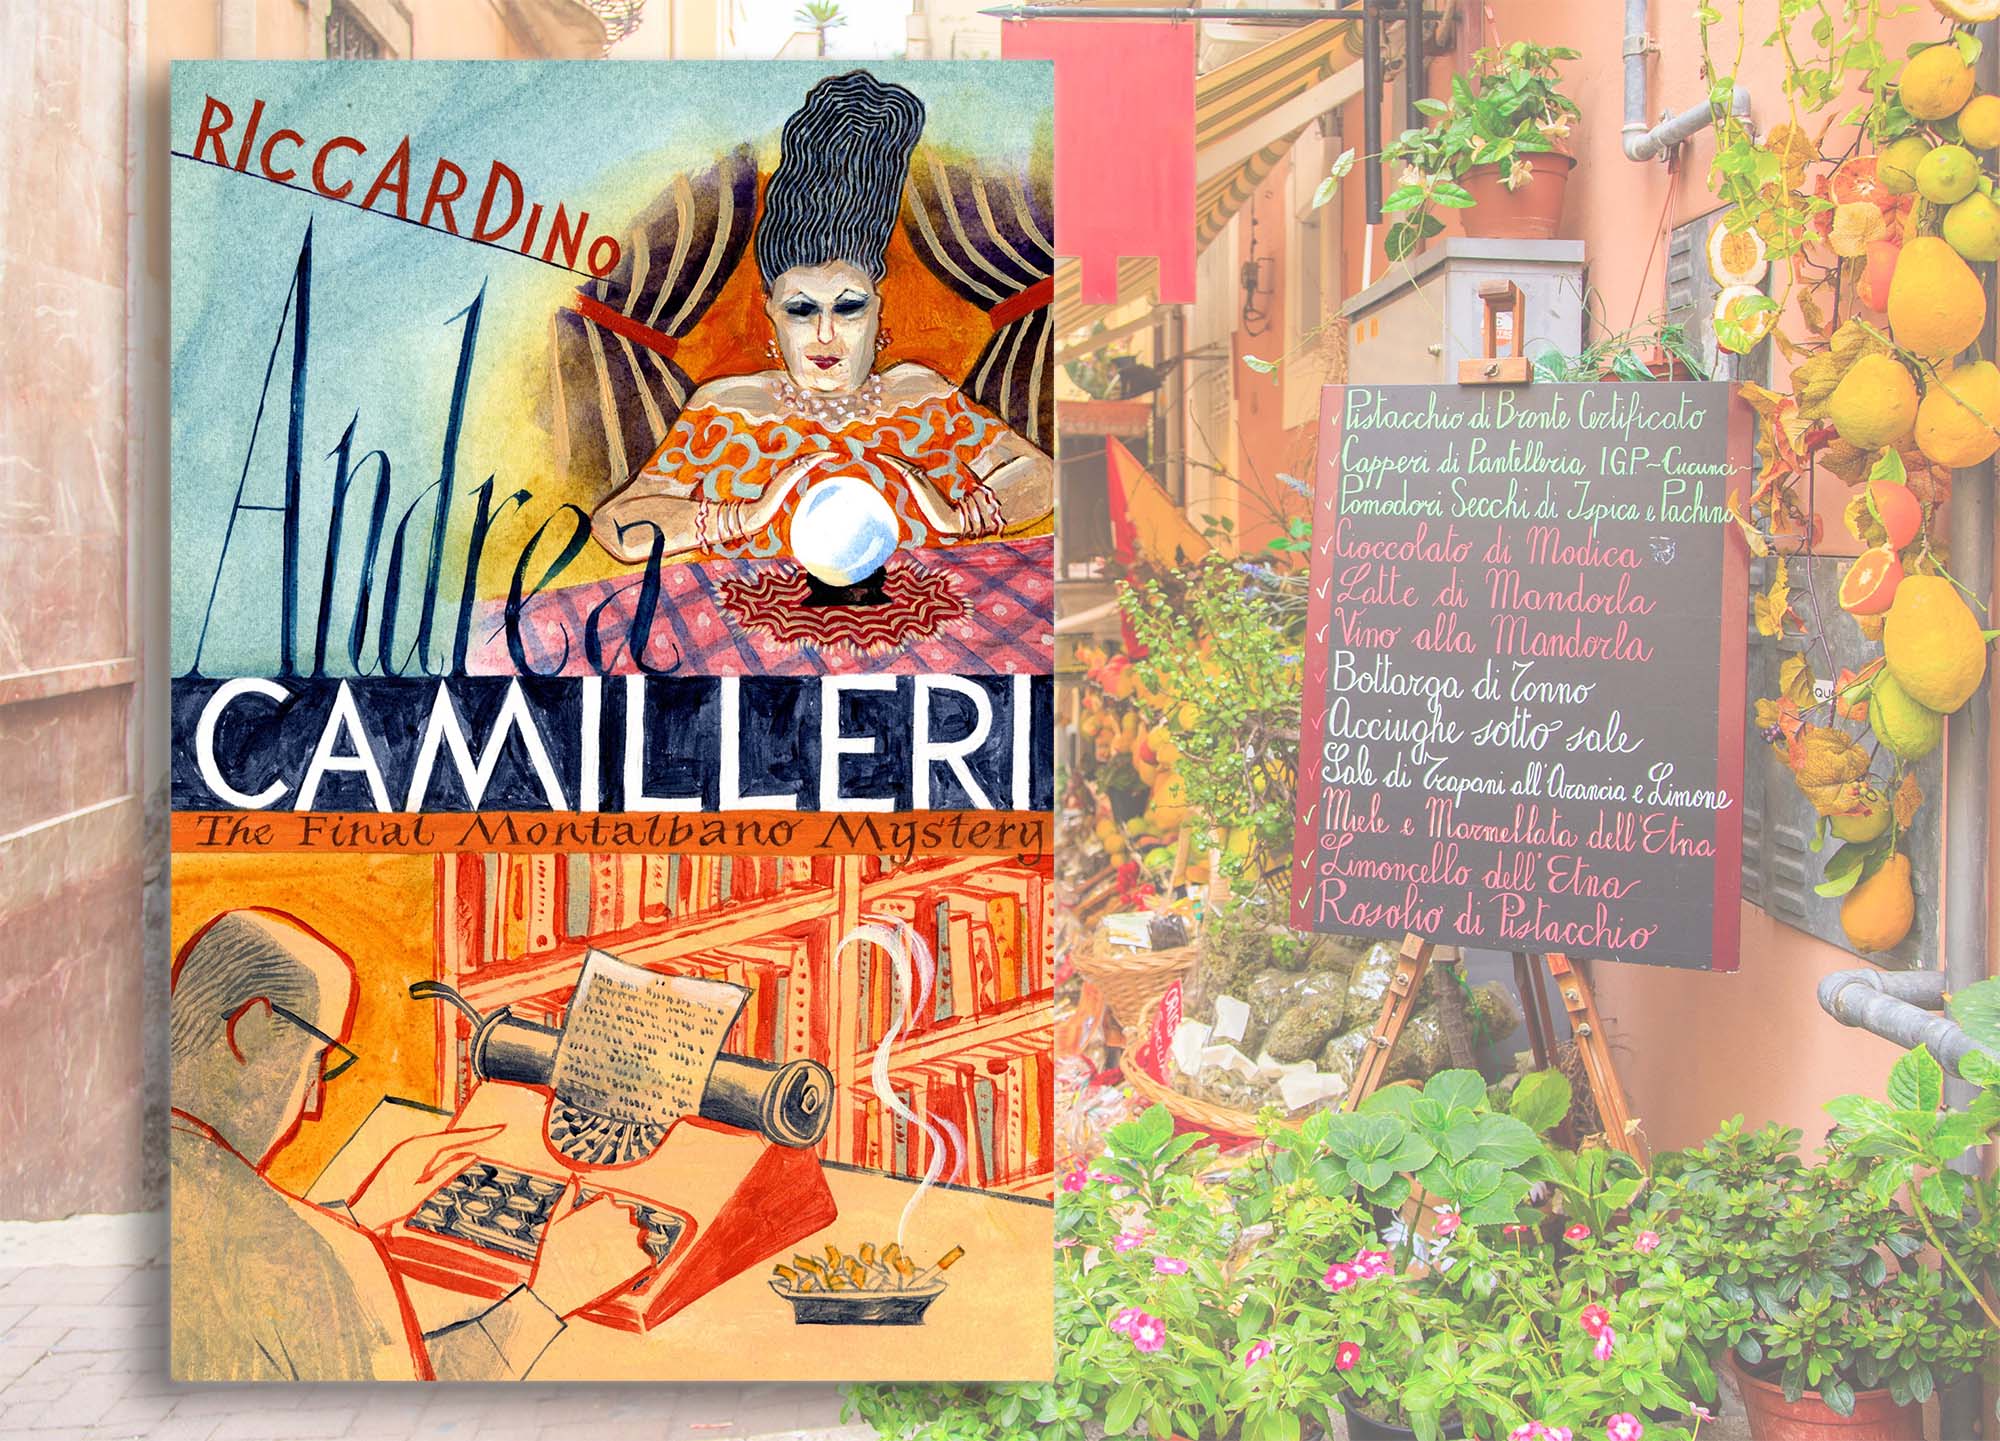 Riccardino by Andrea Camilleri next to a Sicilian restaurant with a blackboard menu